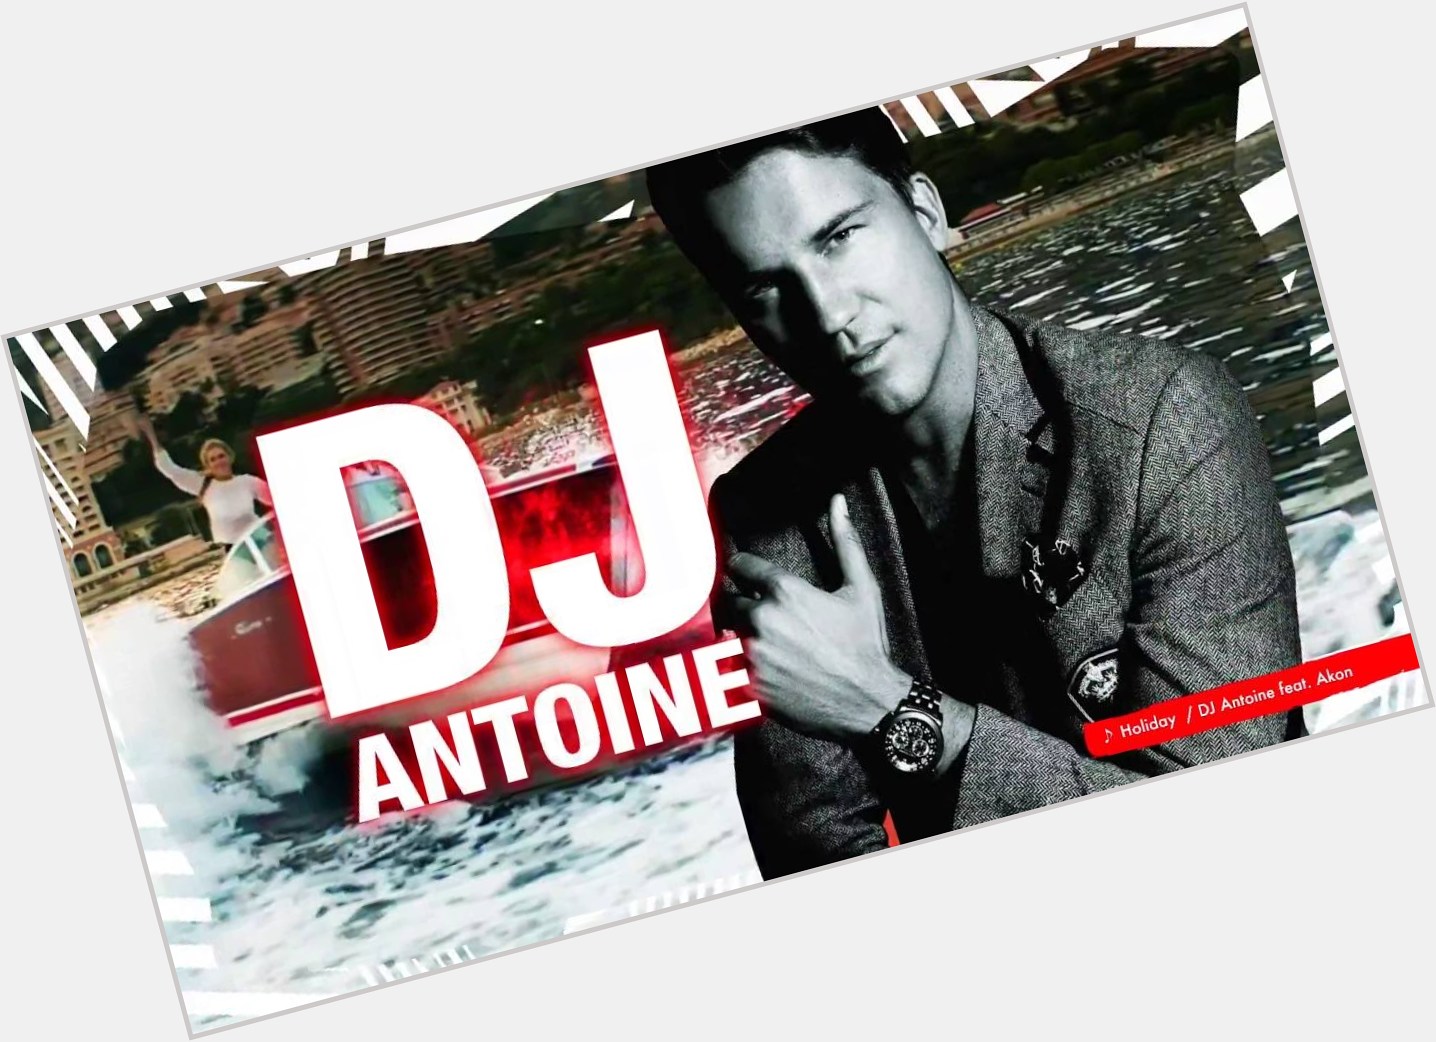 DJ Antoine dating 2